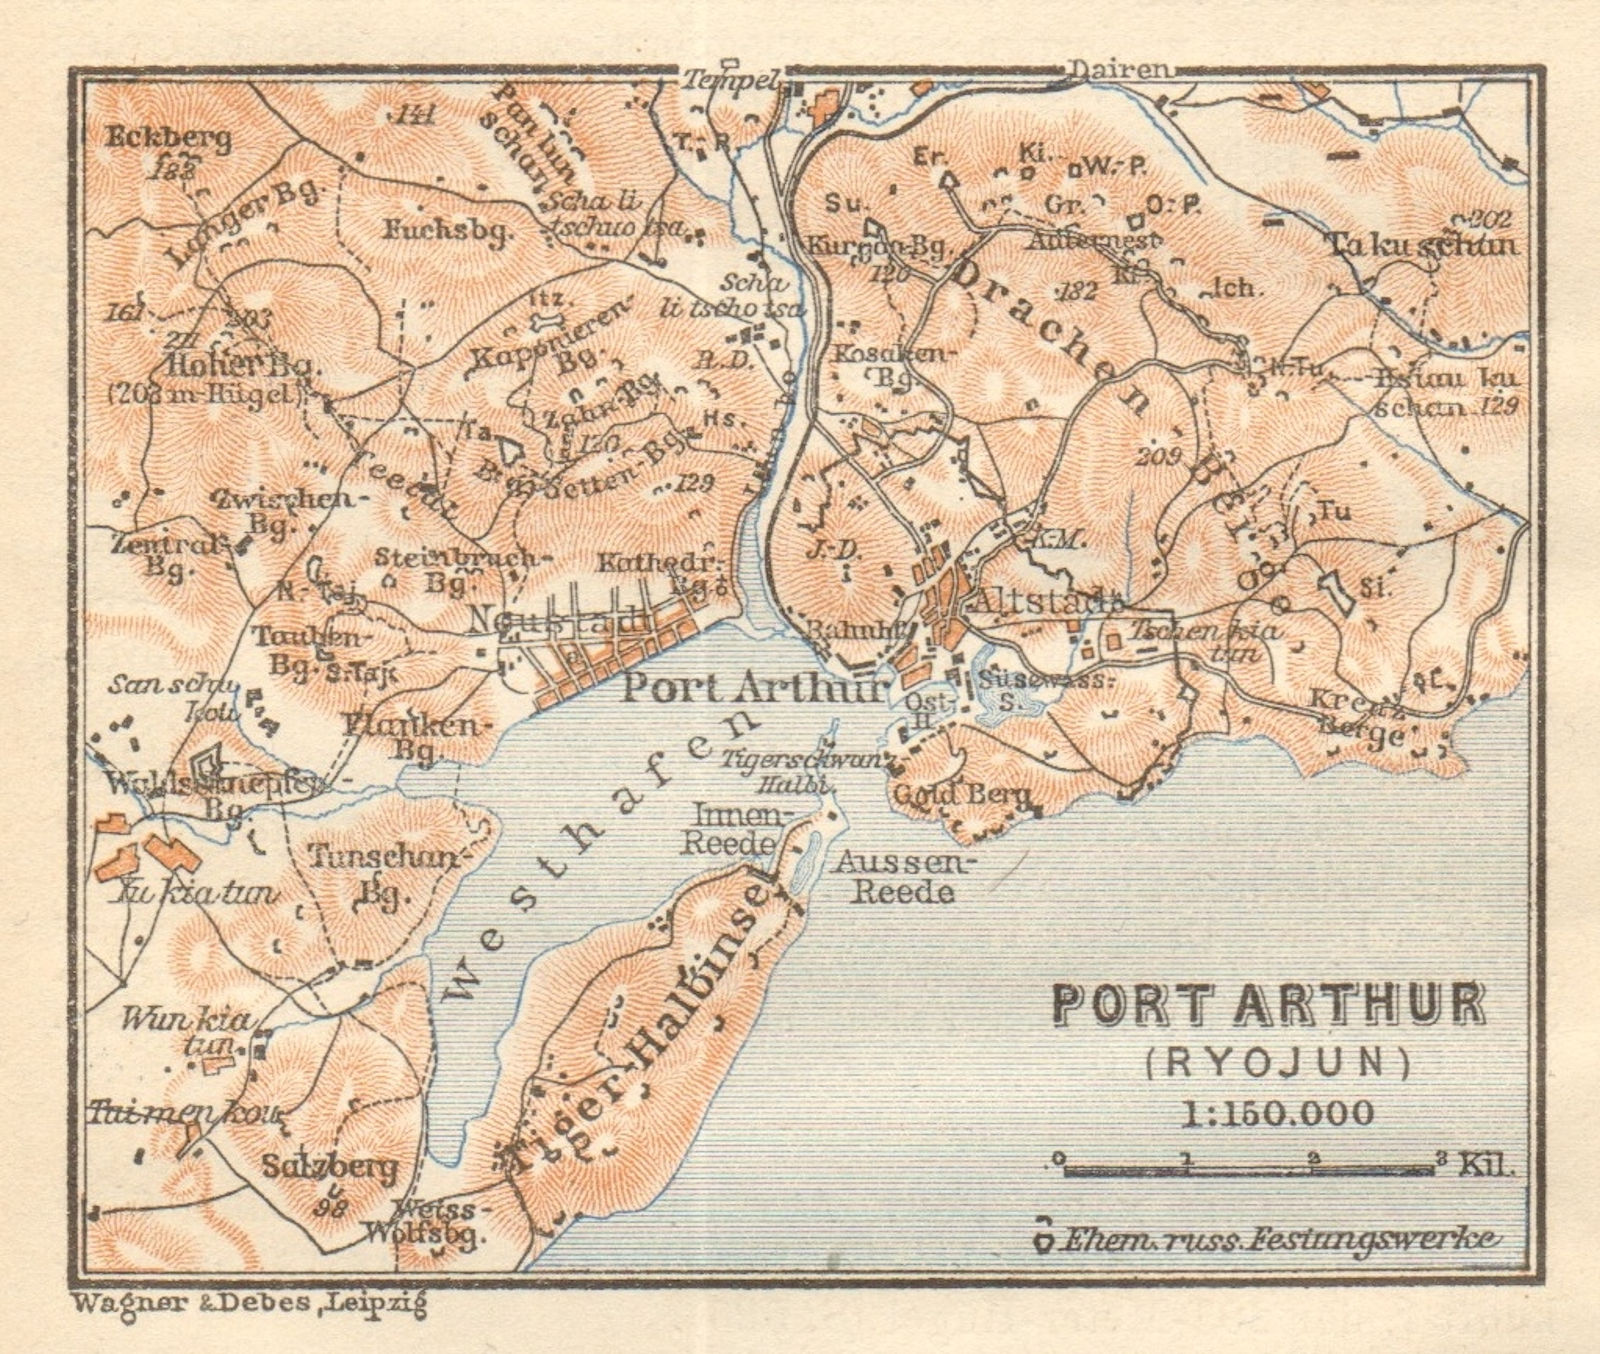 Associate Product Port Arthur city plan Lüshunkou/Lvshunkou District Ryojun China. SMALL 1912 map